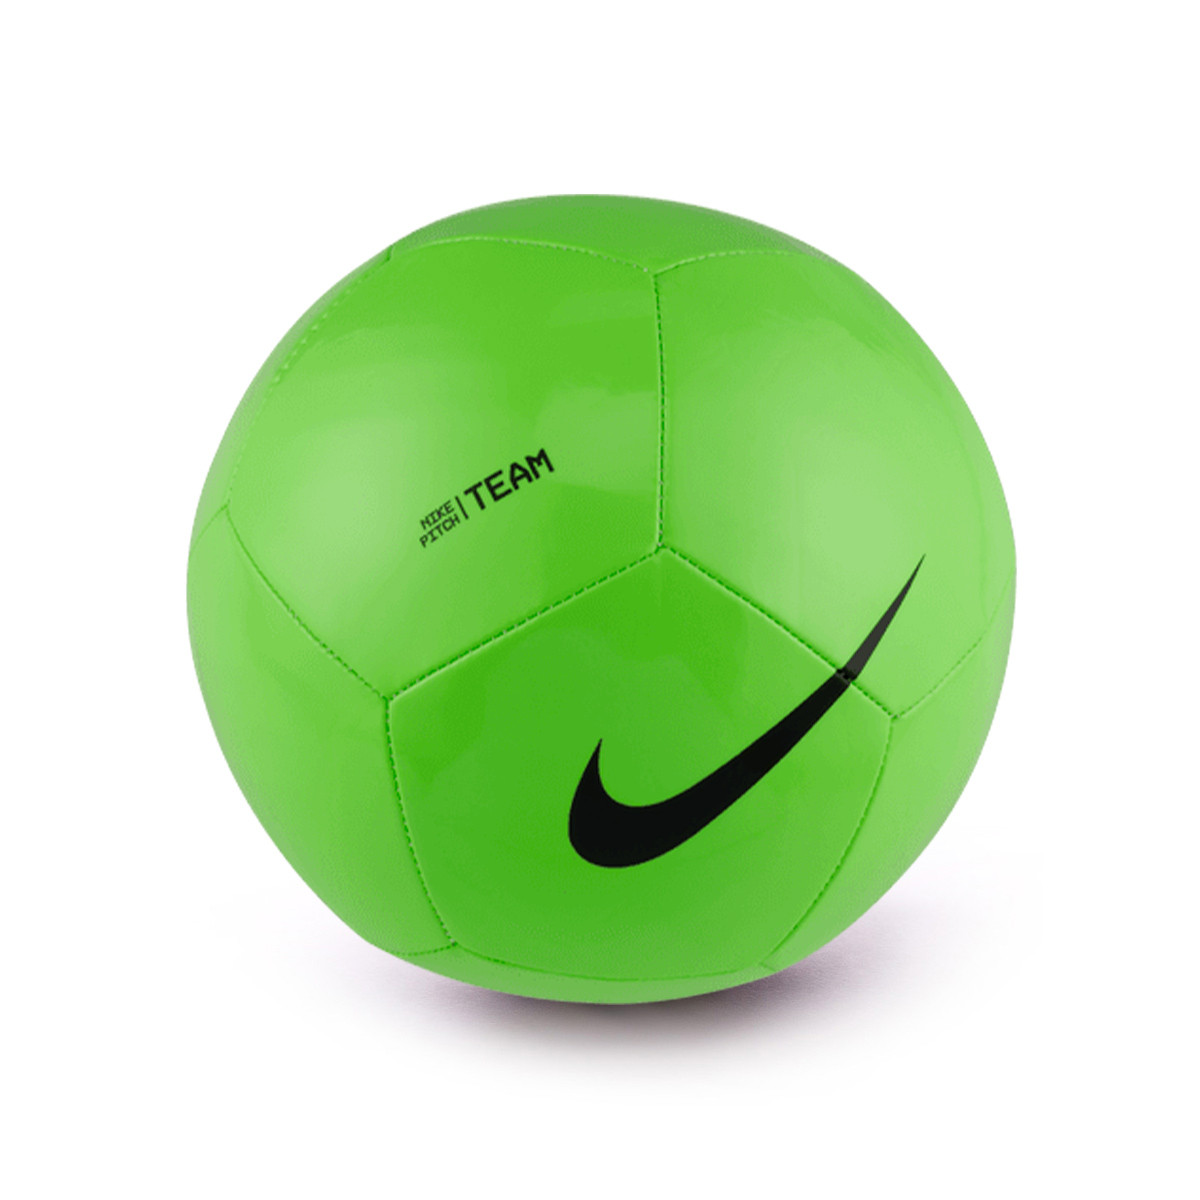 Balón Nike Pitch Team Green-Black - Fútbol Emotion